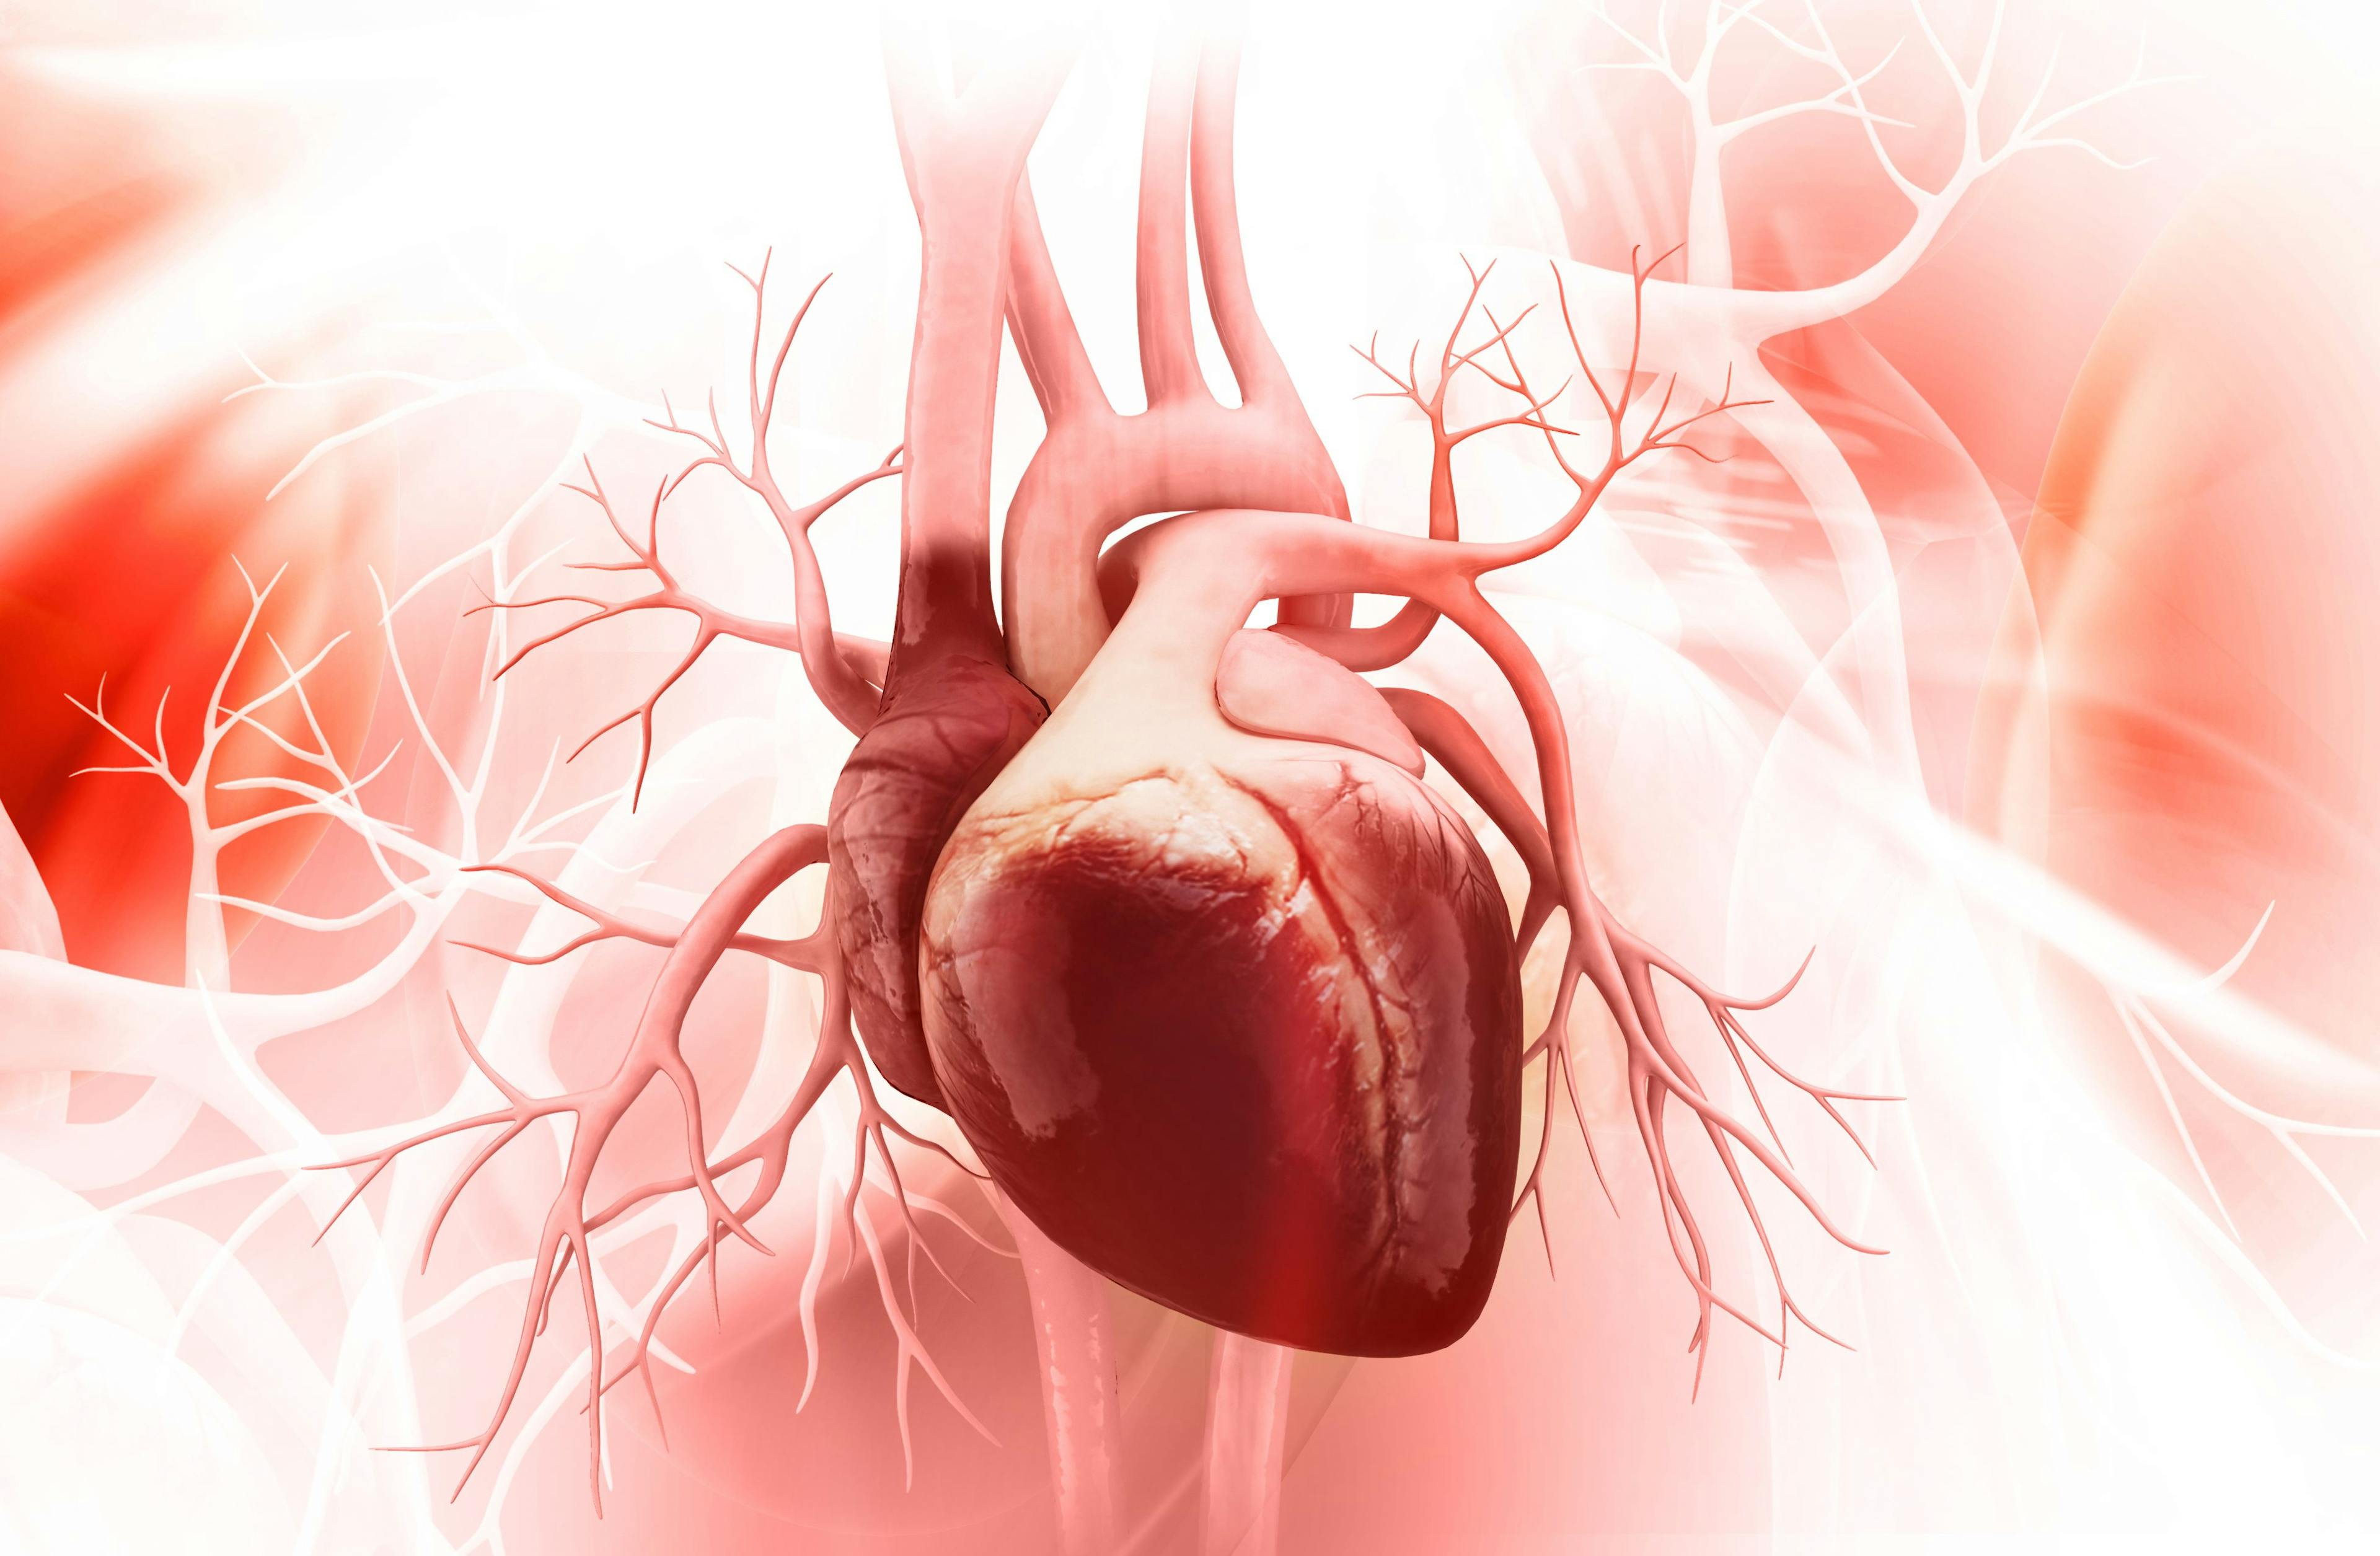 An illustration of a human heart